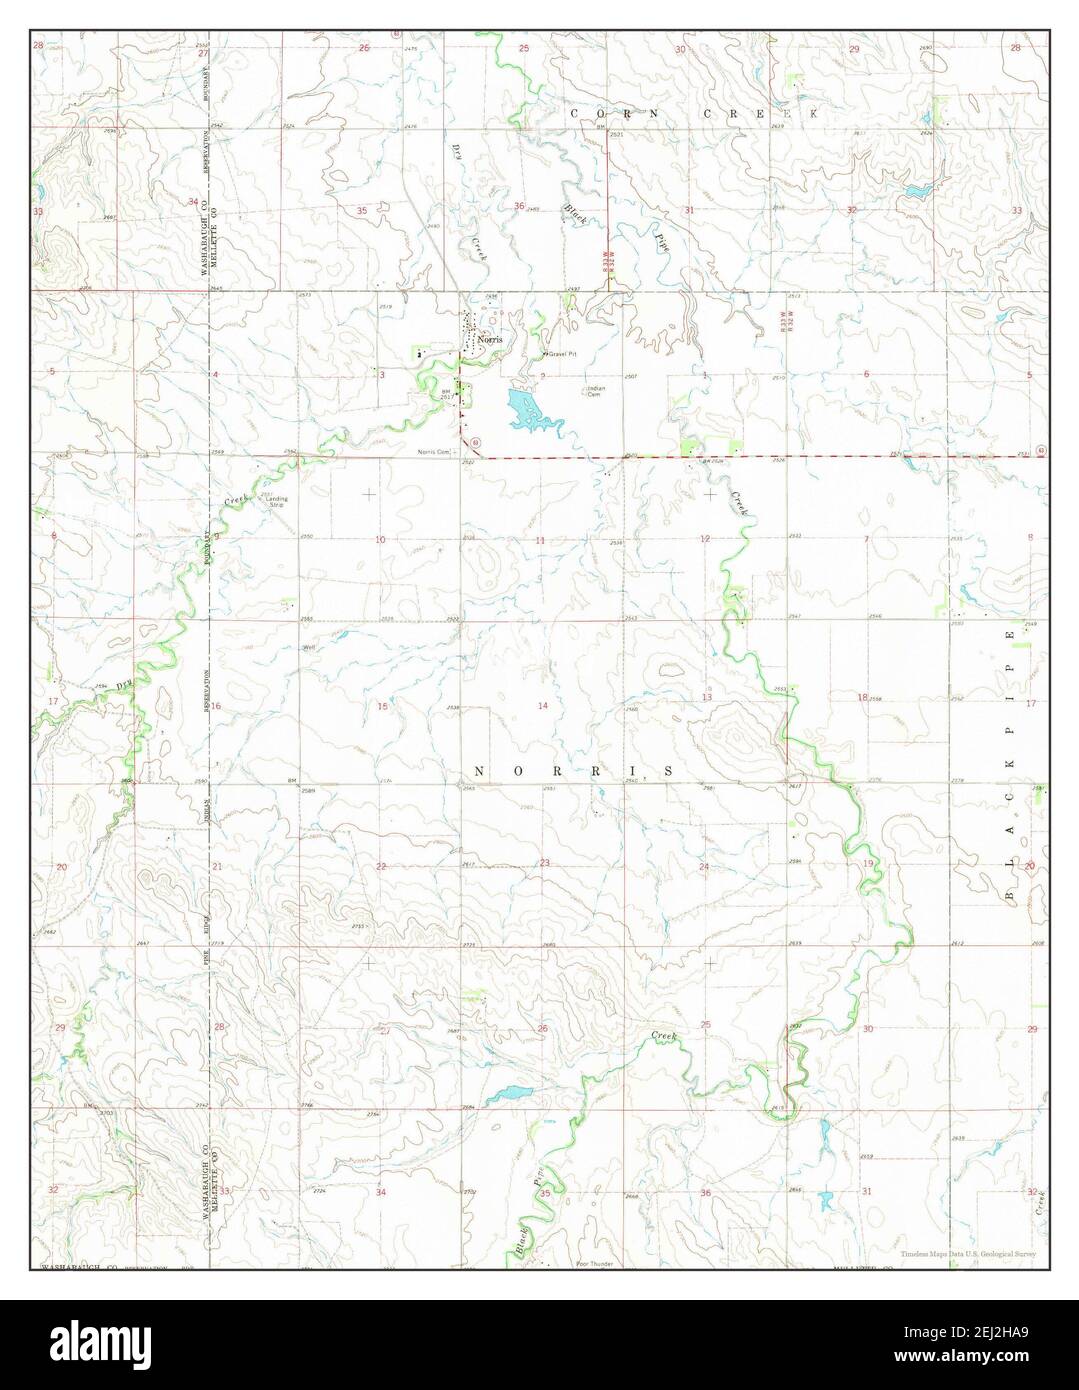 Norris, South Dakota, map 1969, 1:24000, United States of America by Timeless Maps, data U.S. Geological Survey Stock Photo